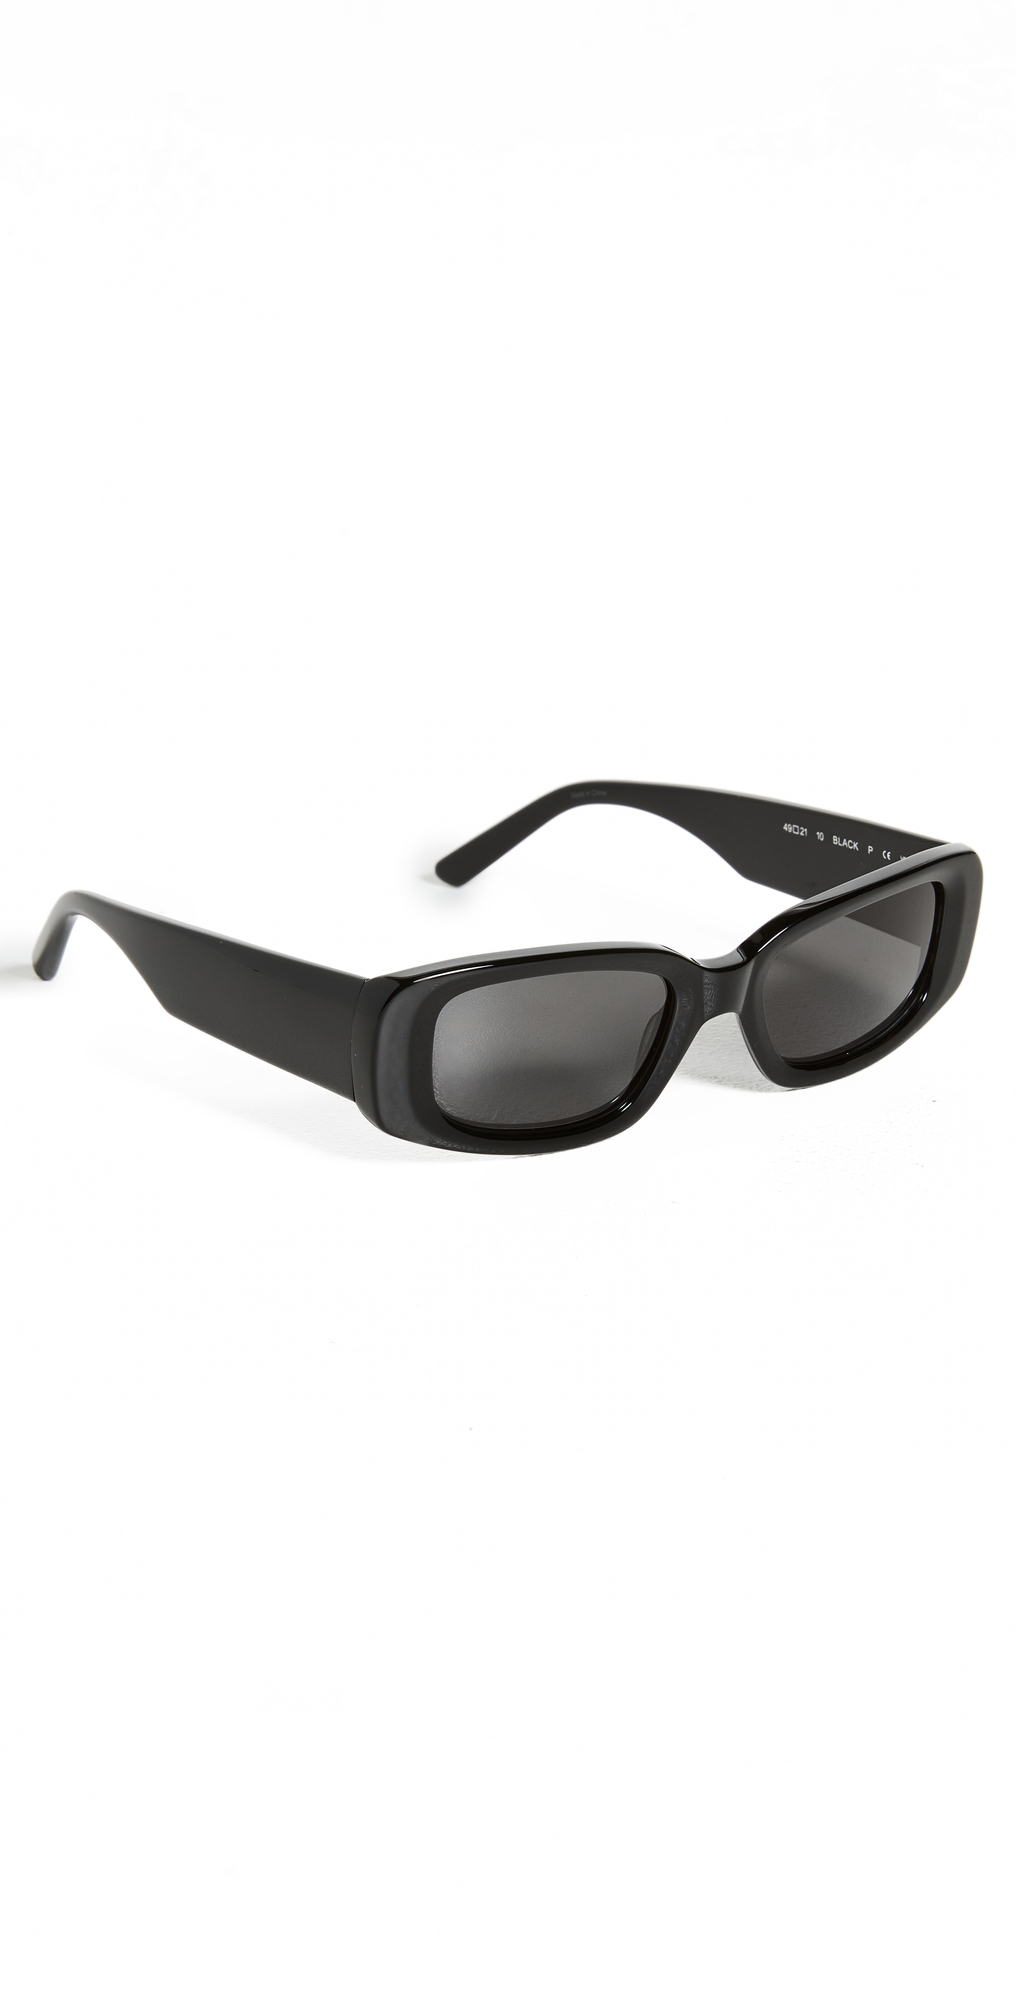 Chimi 10.2 Sunglasses in black